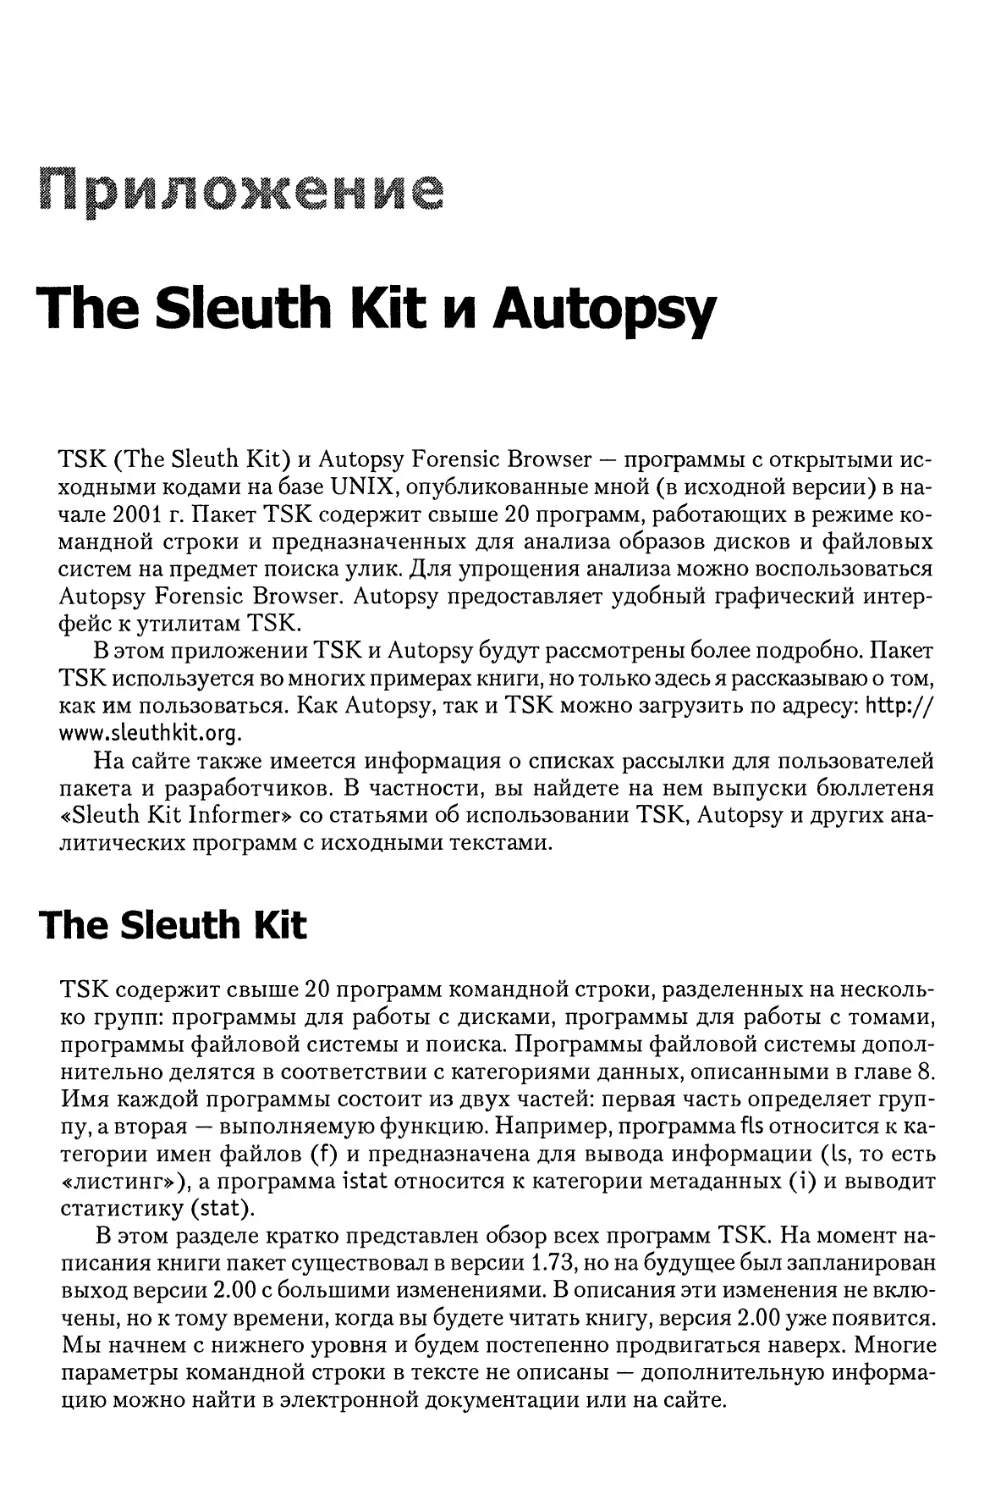 Приложение. The Sleuth Kit и Autopsy